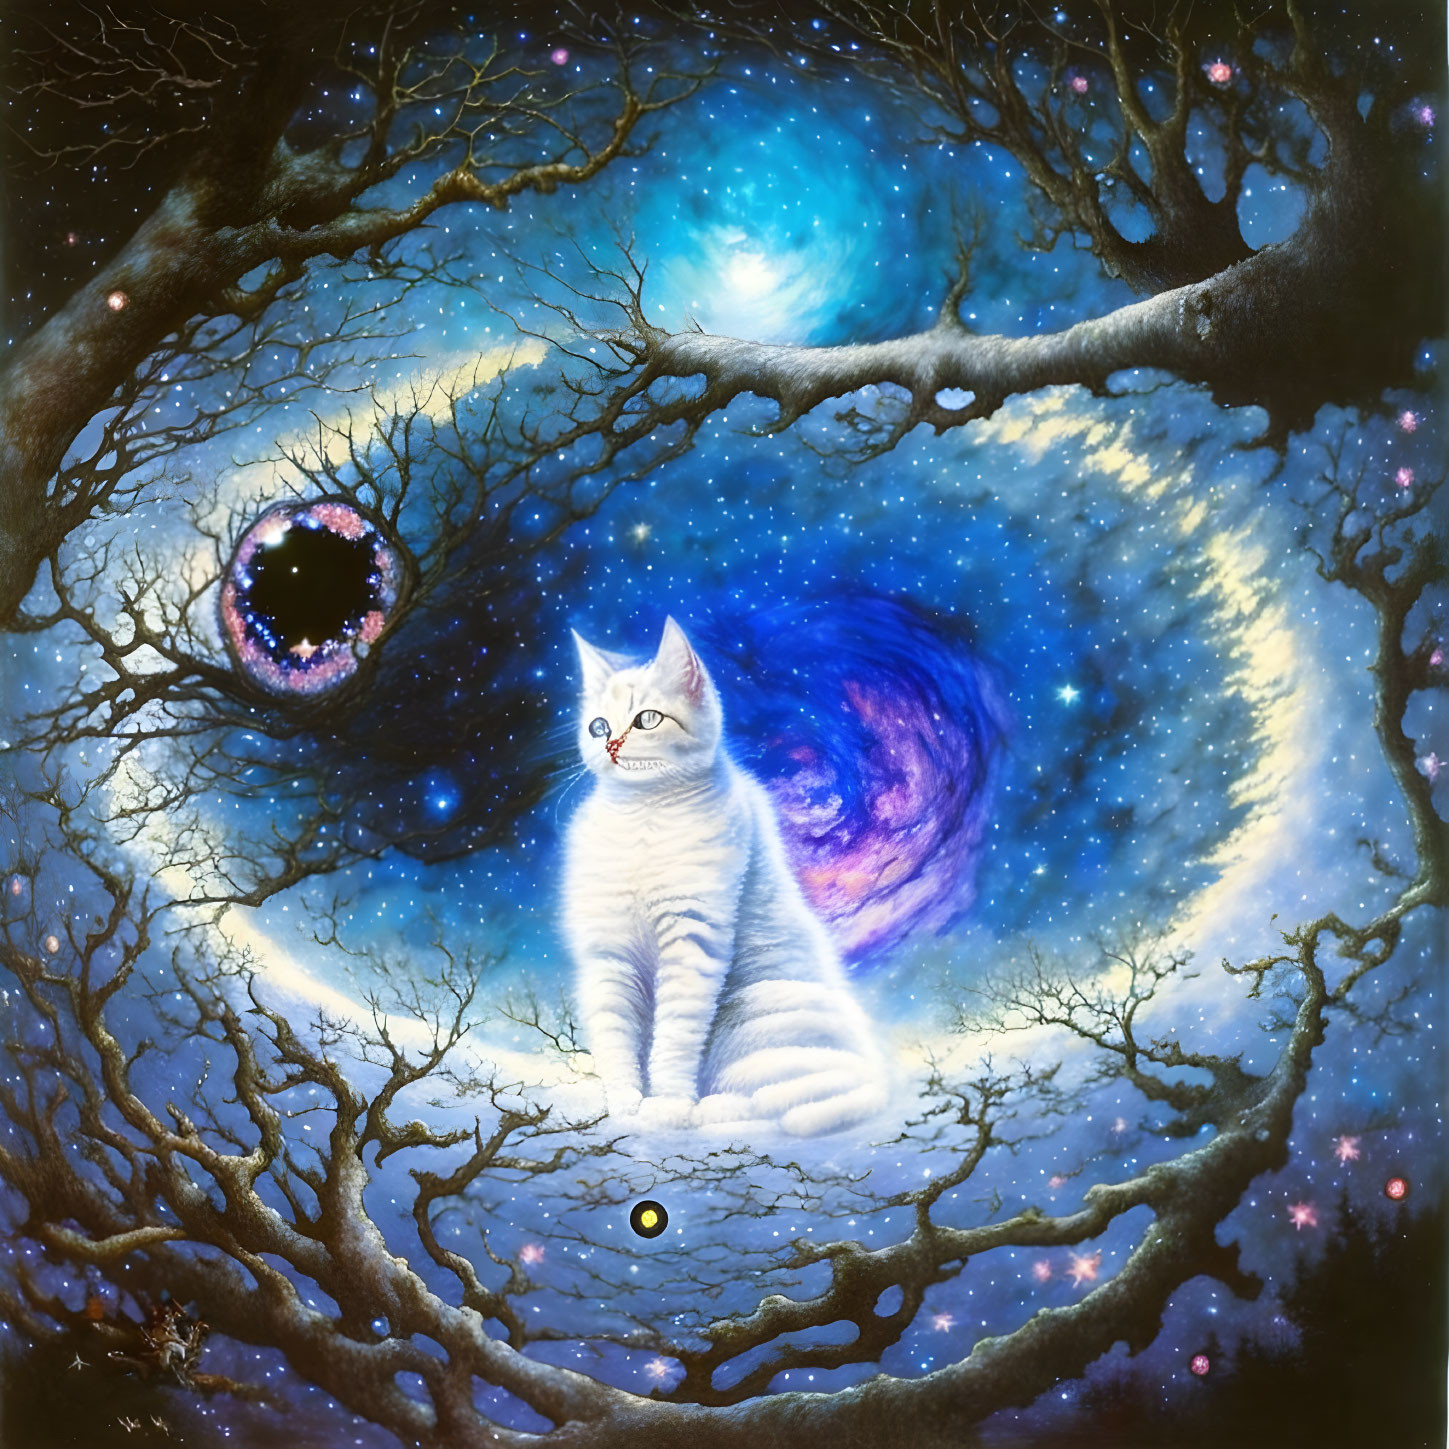 White Cat in Cosmic Fantasy Scene with Galaxy Swirls